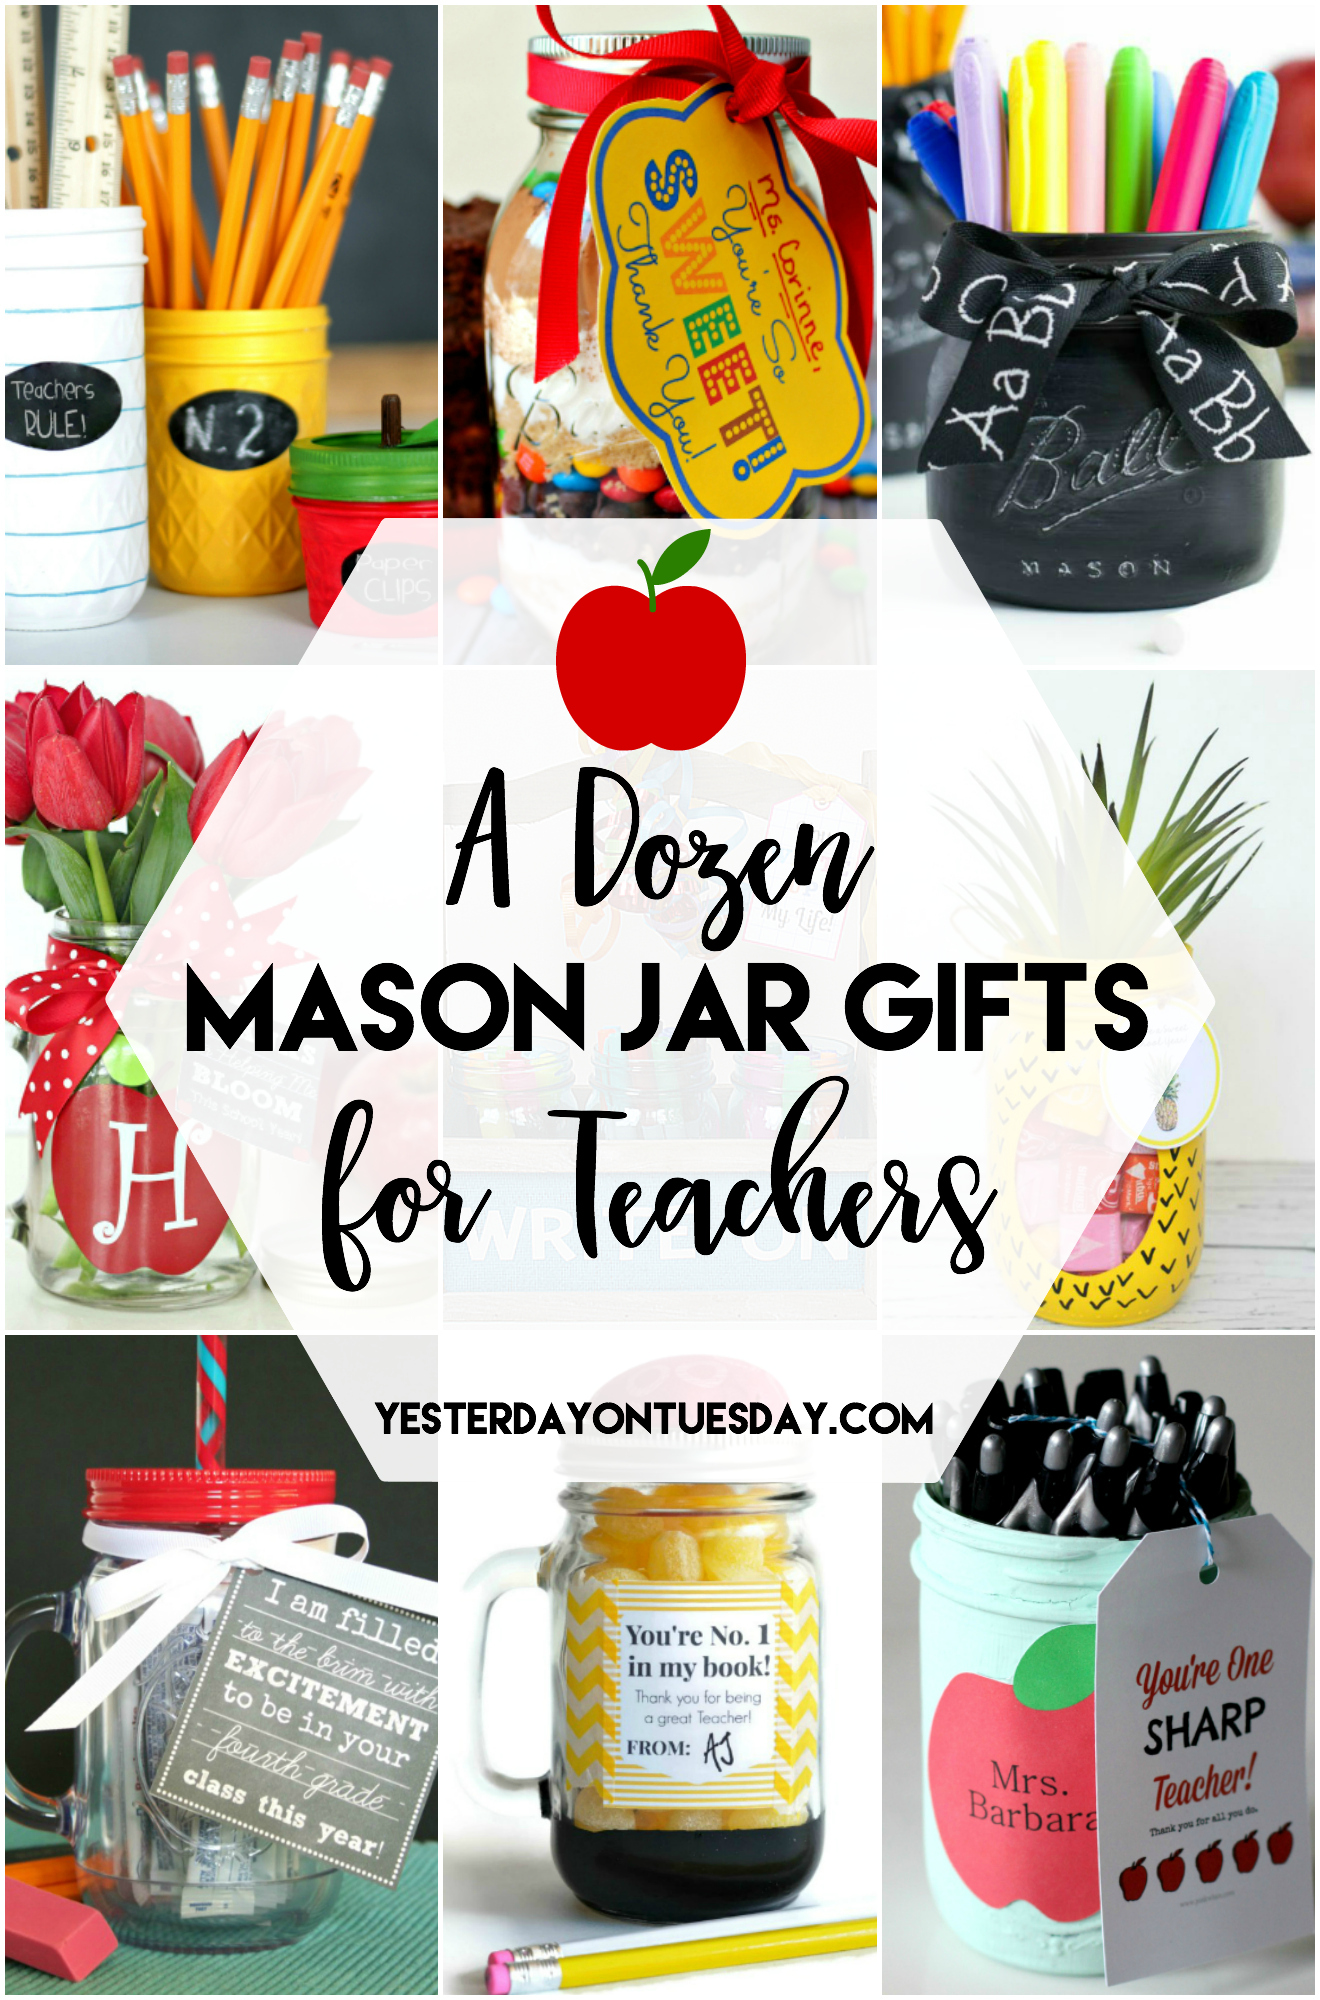 A Dozen Mason Jar Gifts for Teachers | Yesterday On Tuesday